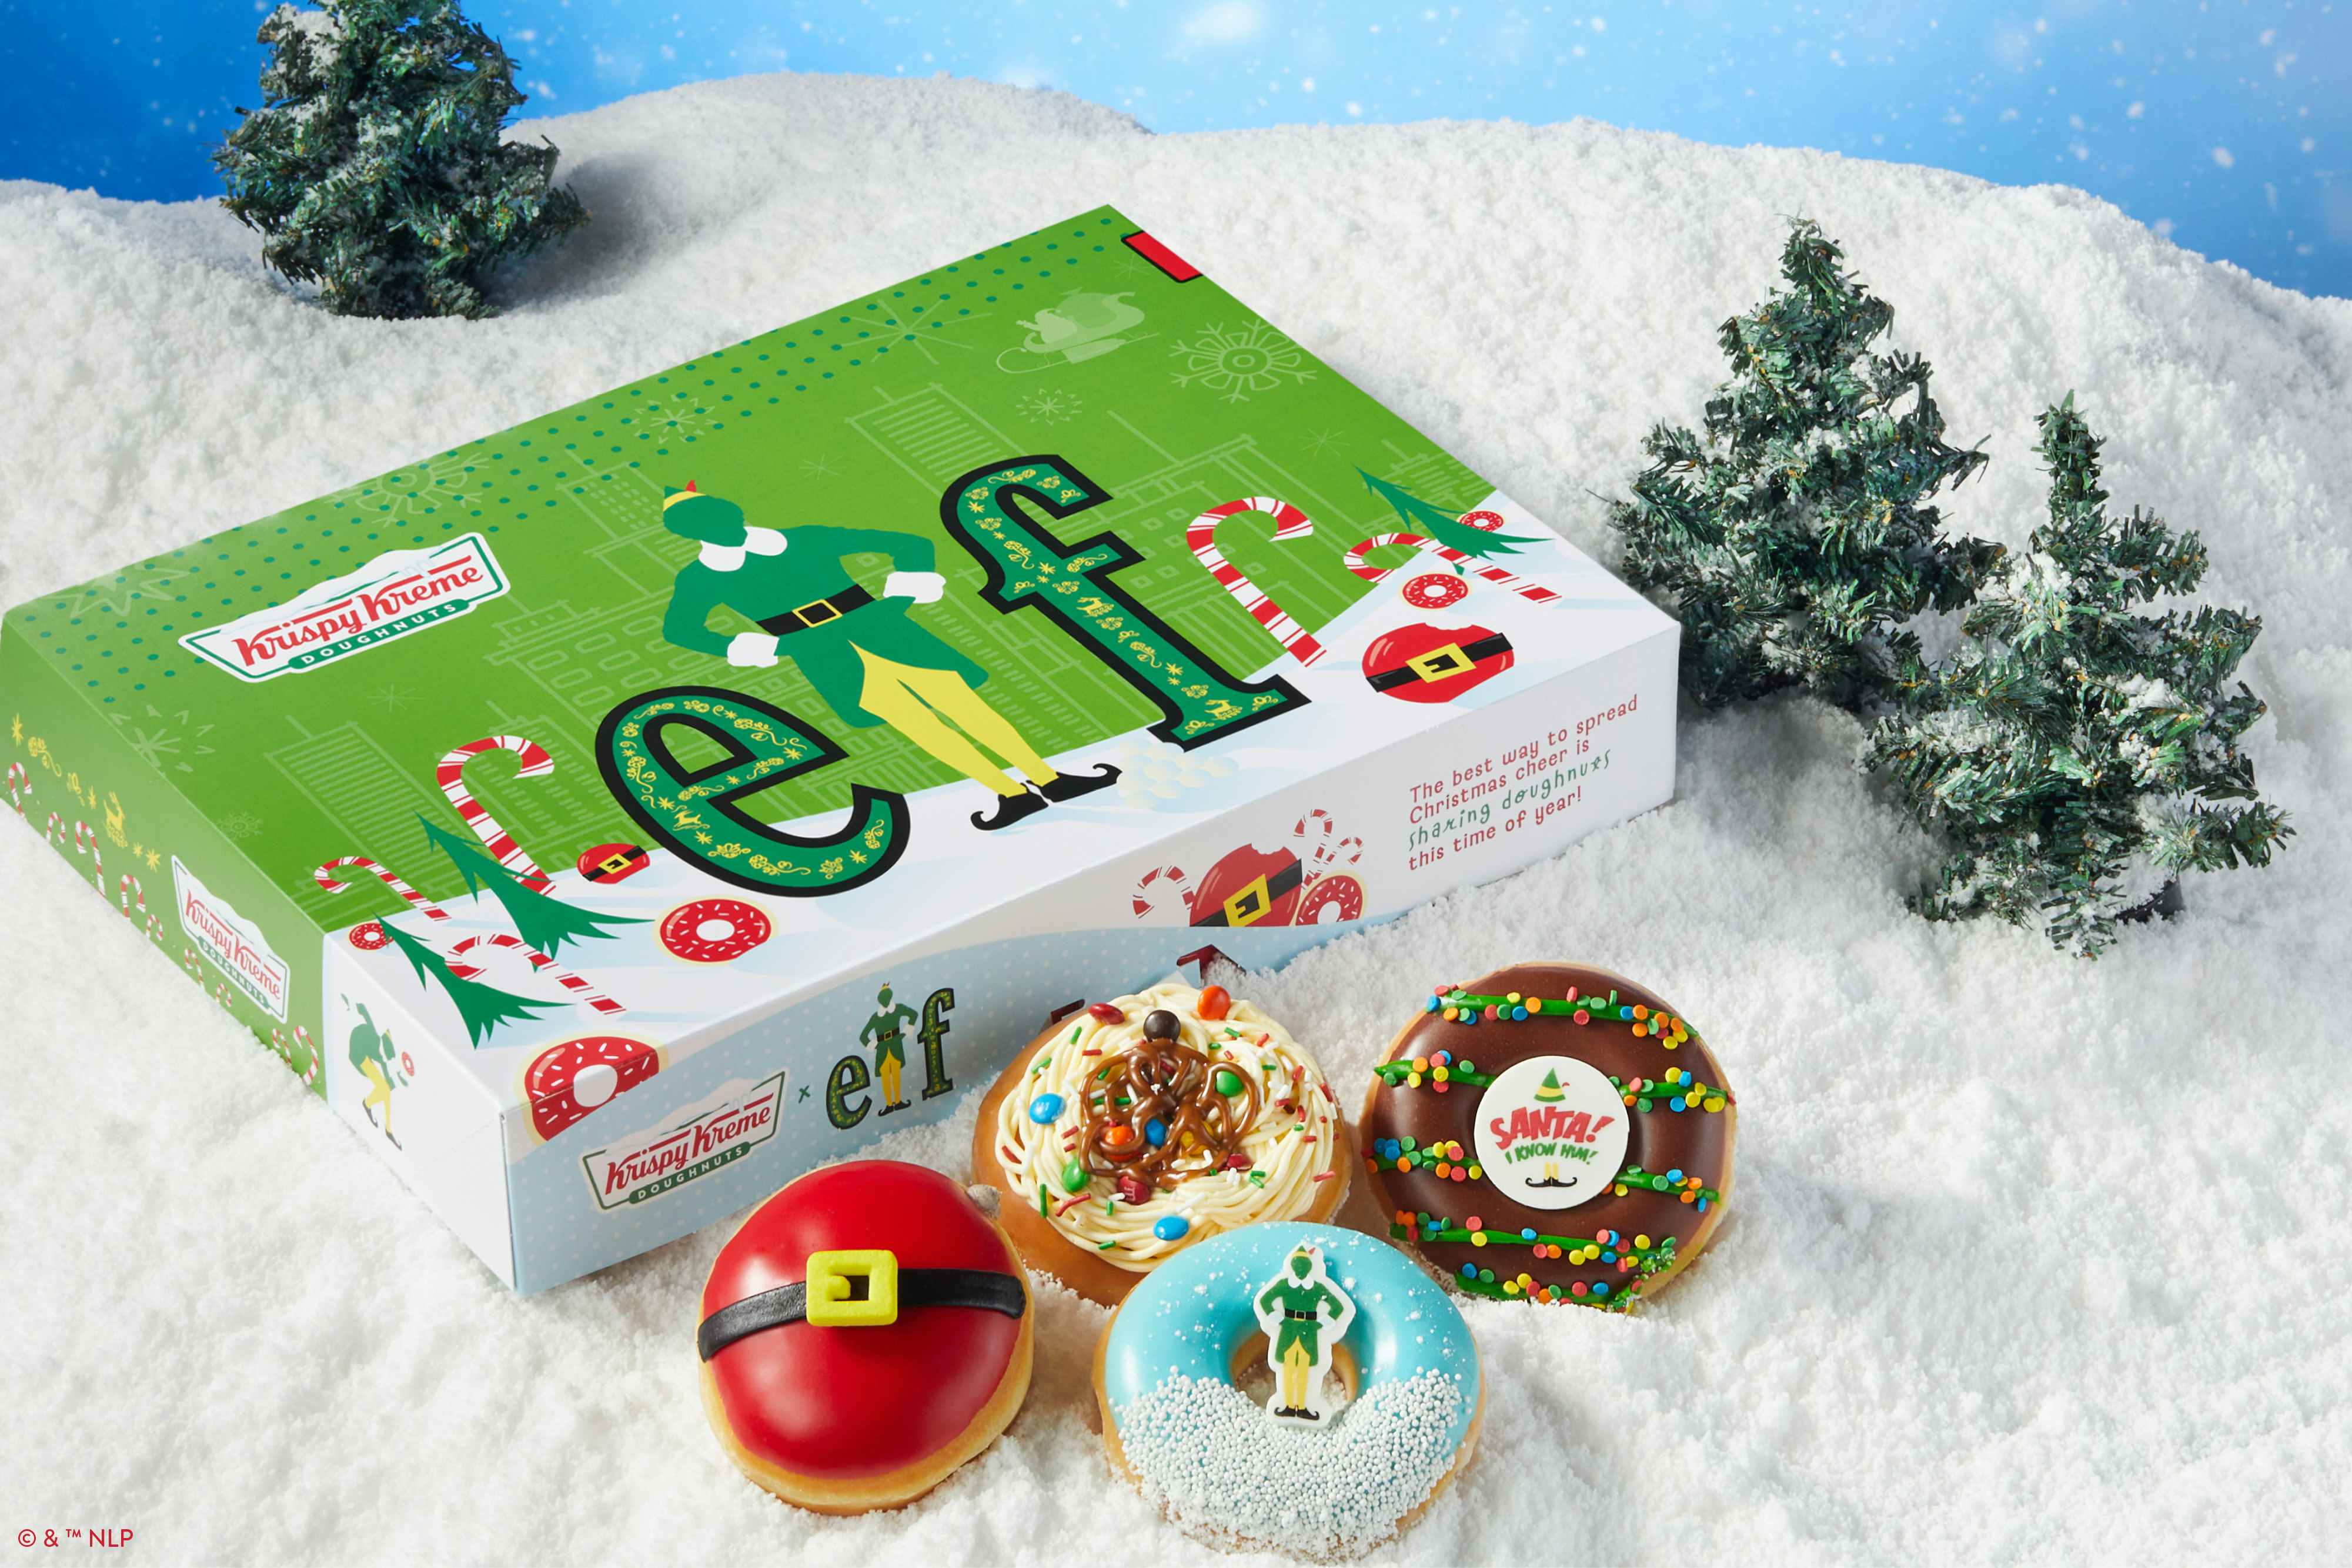 The four Elf-inspired doughnuts next to the seasonal Krispy Kreme box.